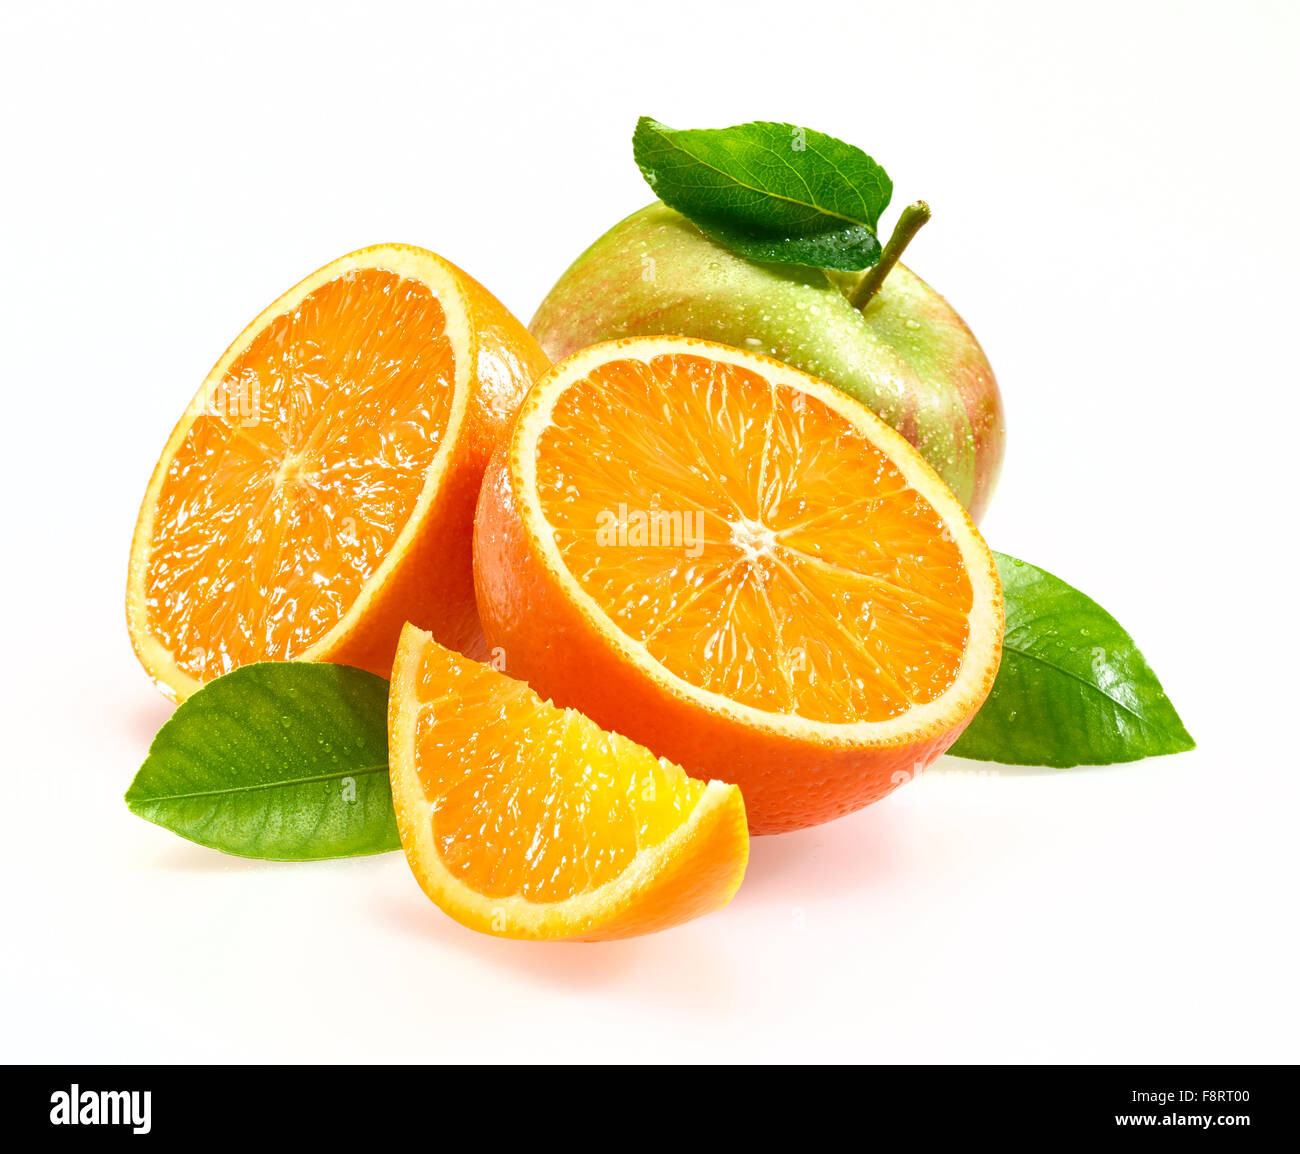 oranges and apple Stock Photo